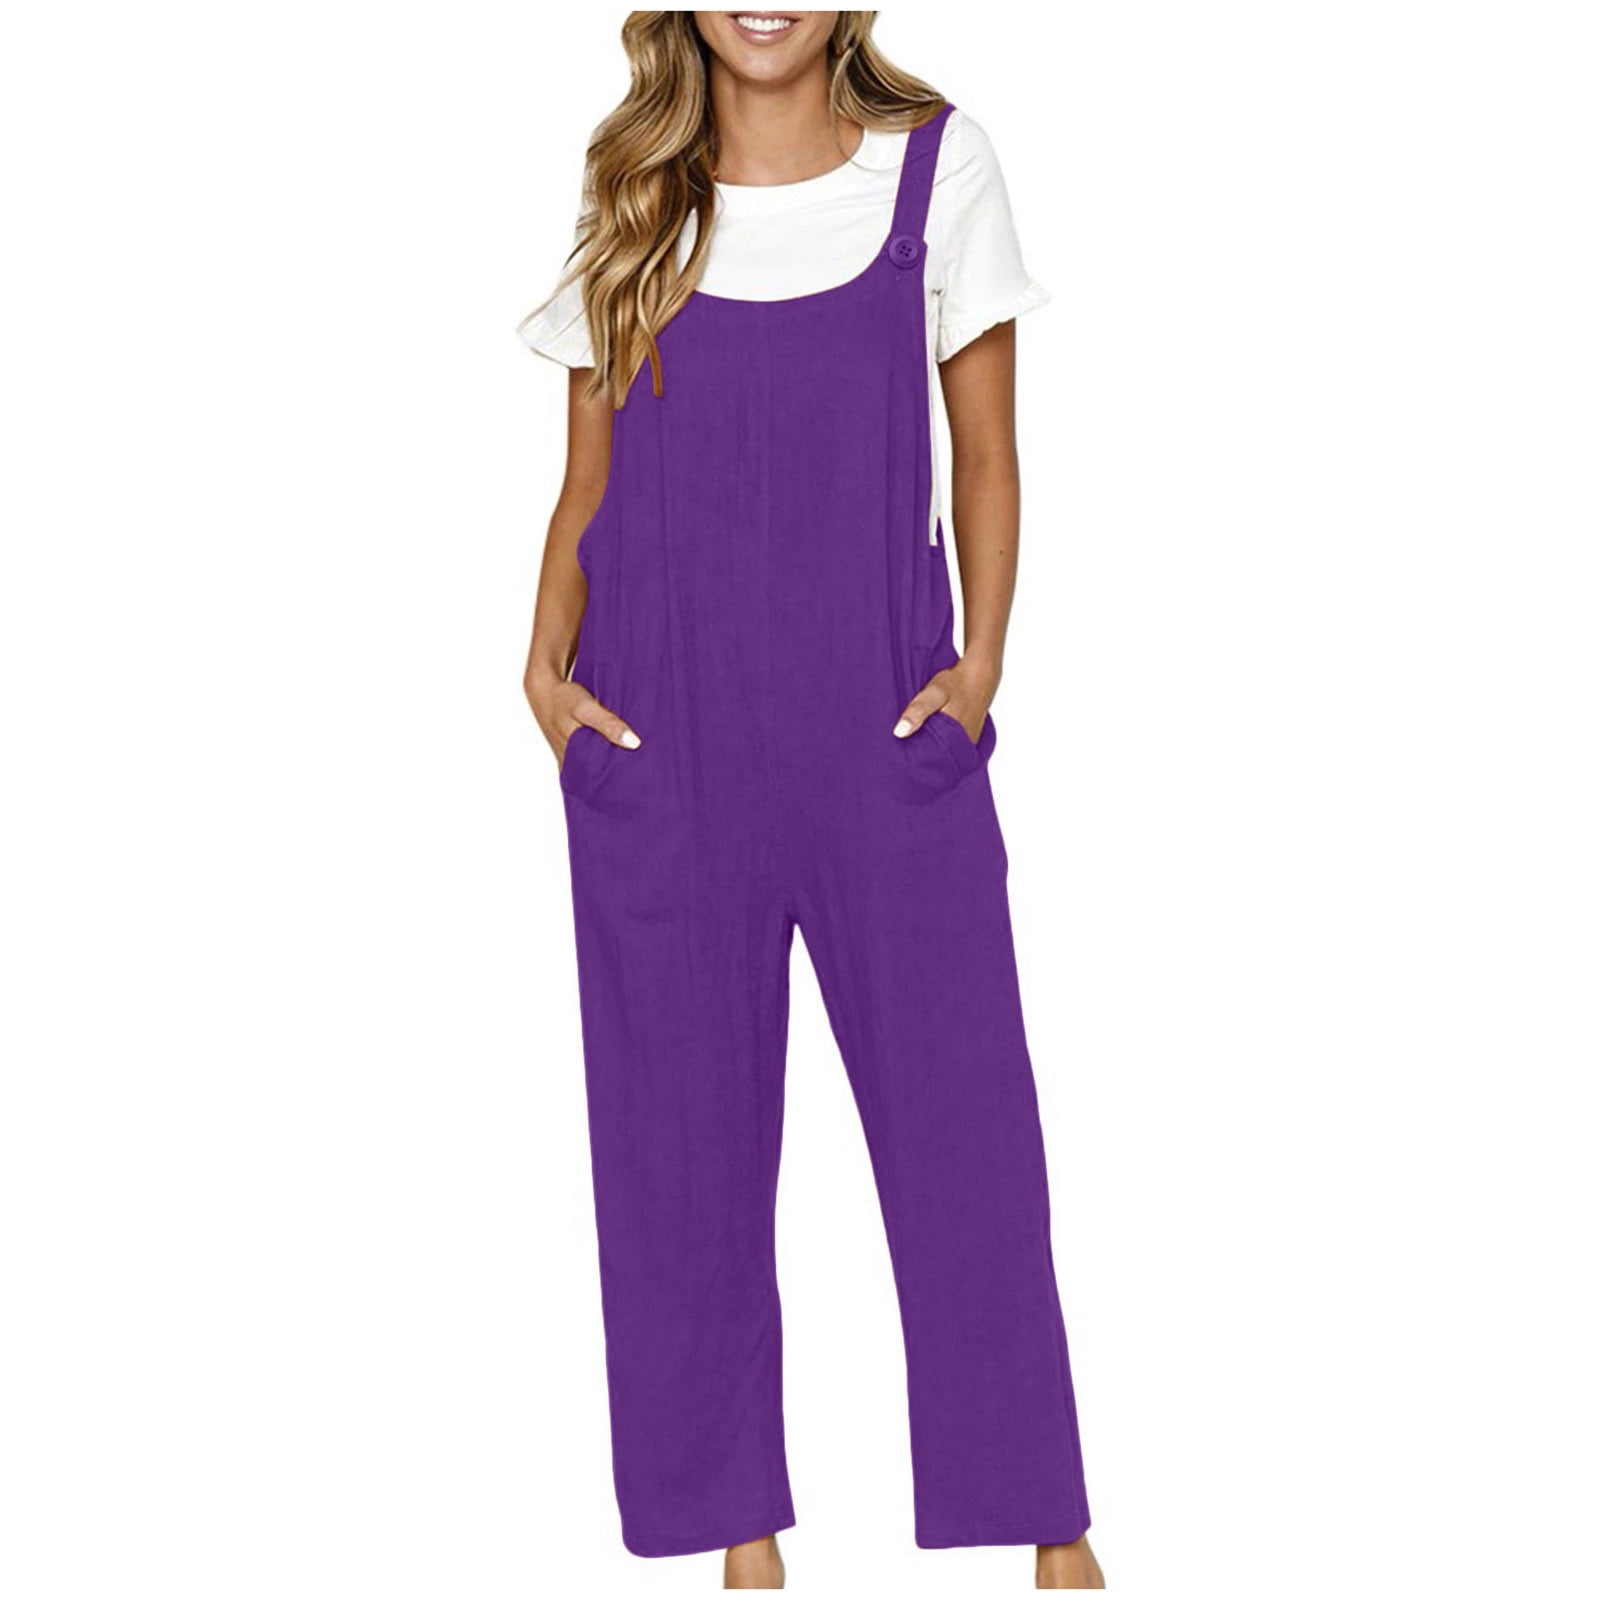 Thigh Length Cotton Girls Purple Printed Short Jumpsuit, Size